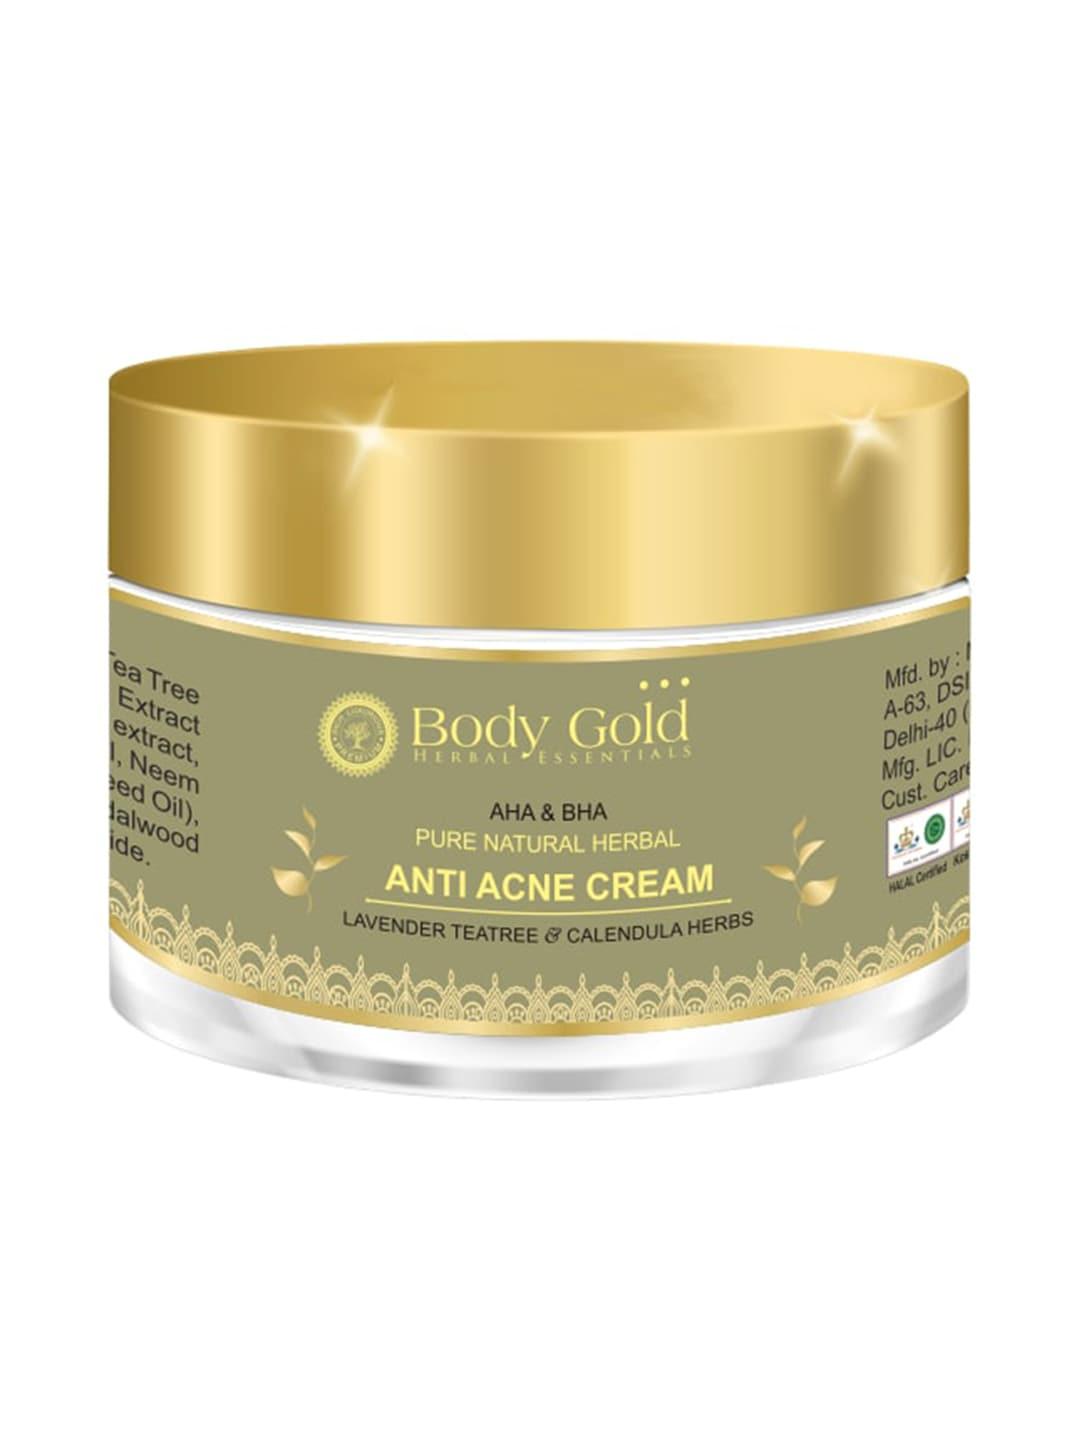 Body Gold Anti Acne Cream With Lavender Teatree & Calendula Herbs - 50g